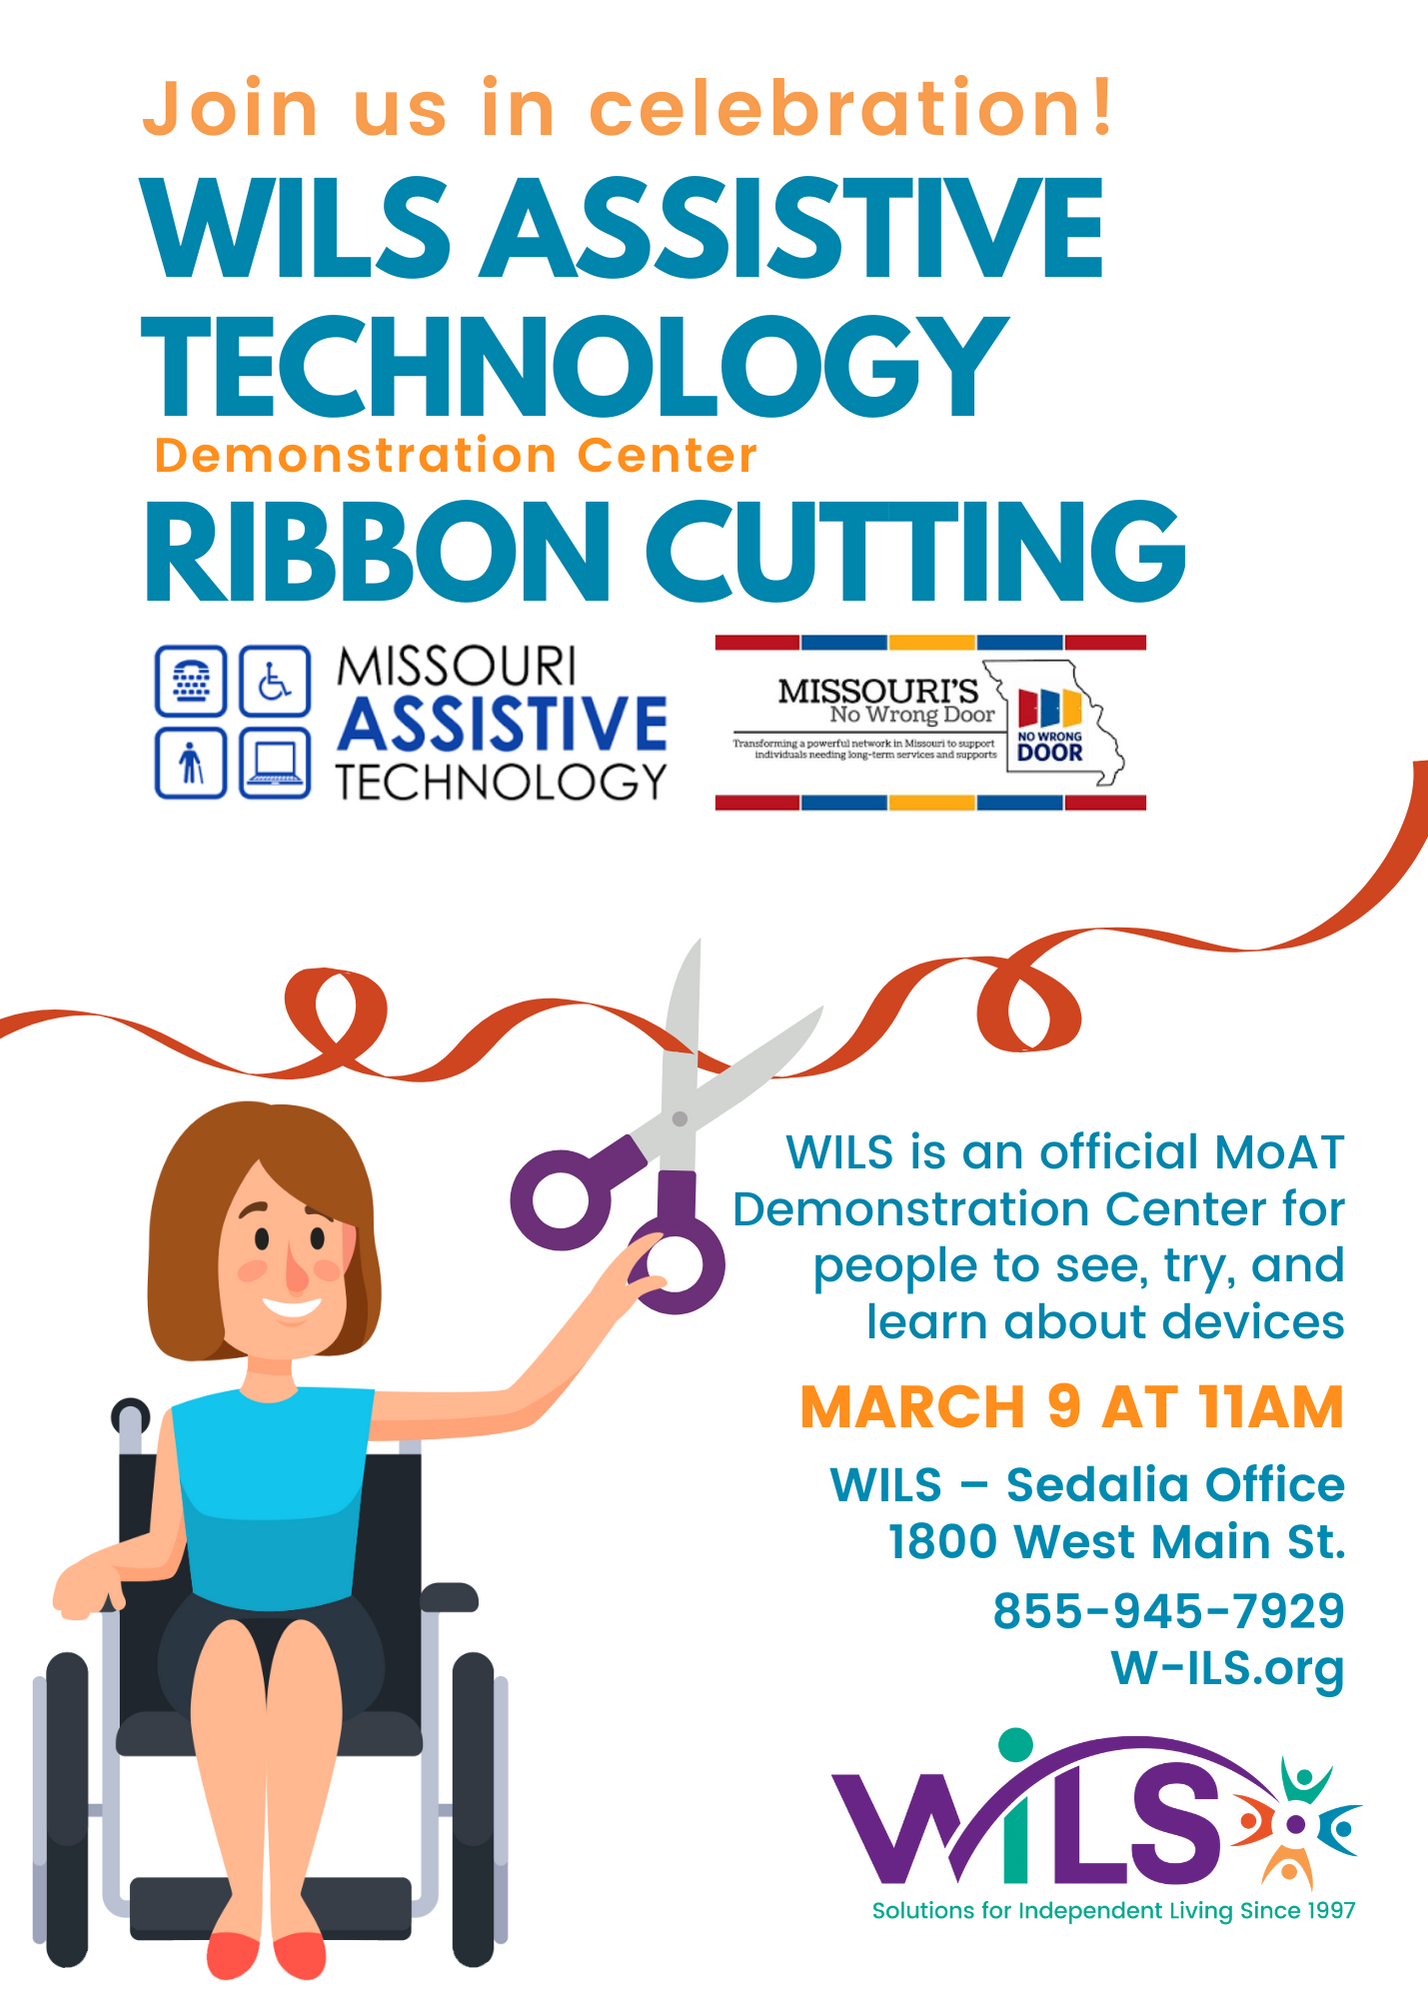 Ribbon Cutting - AT Demo Center @ WILS Sedalia Office